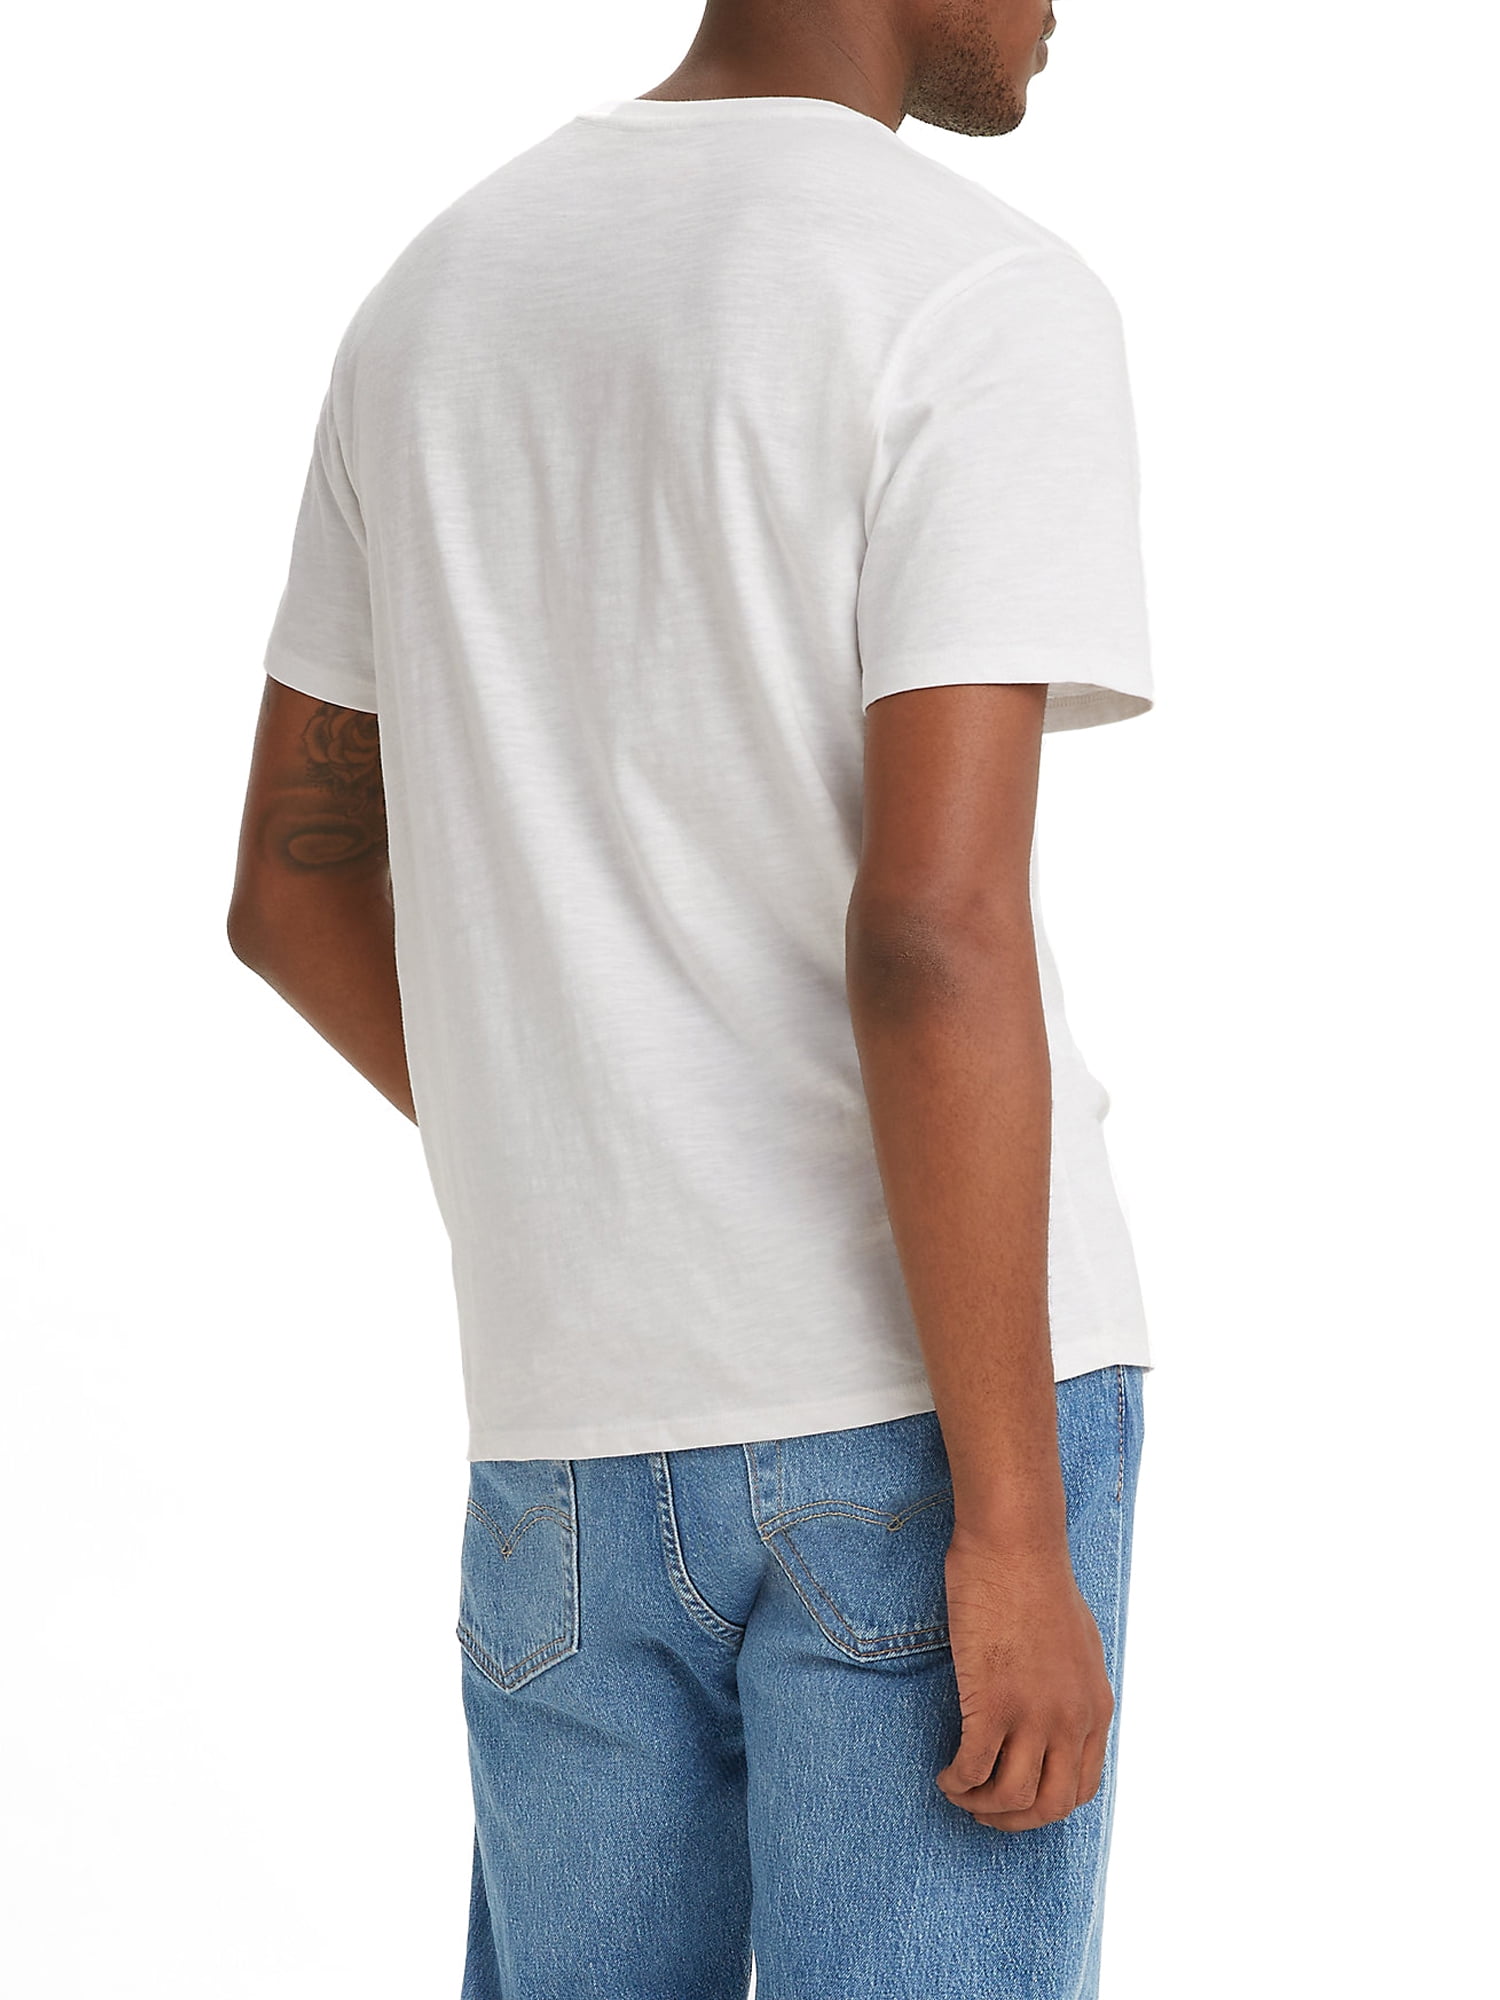 Levis Vintage Clothing LVC White Pocket T Shirt XL